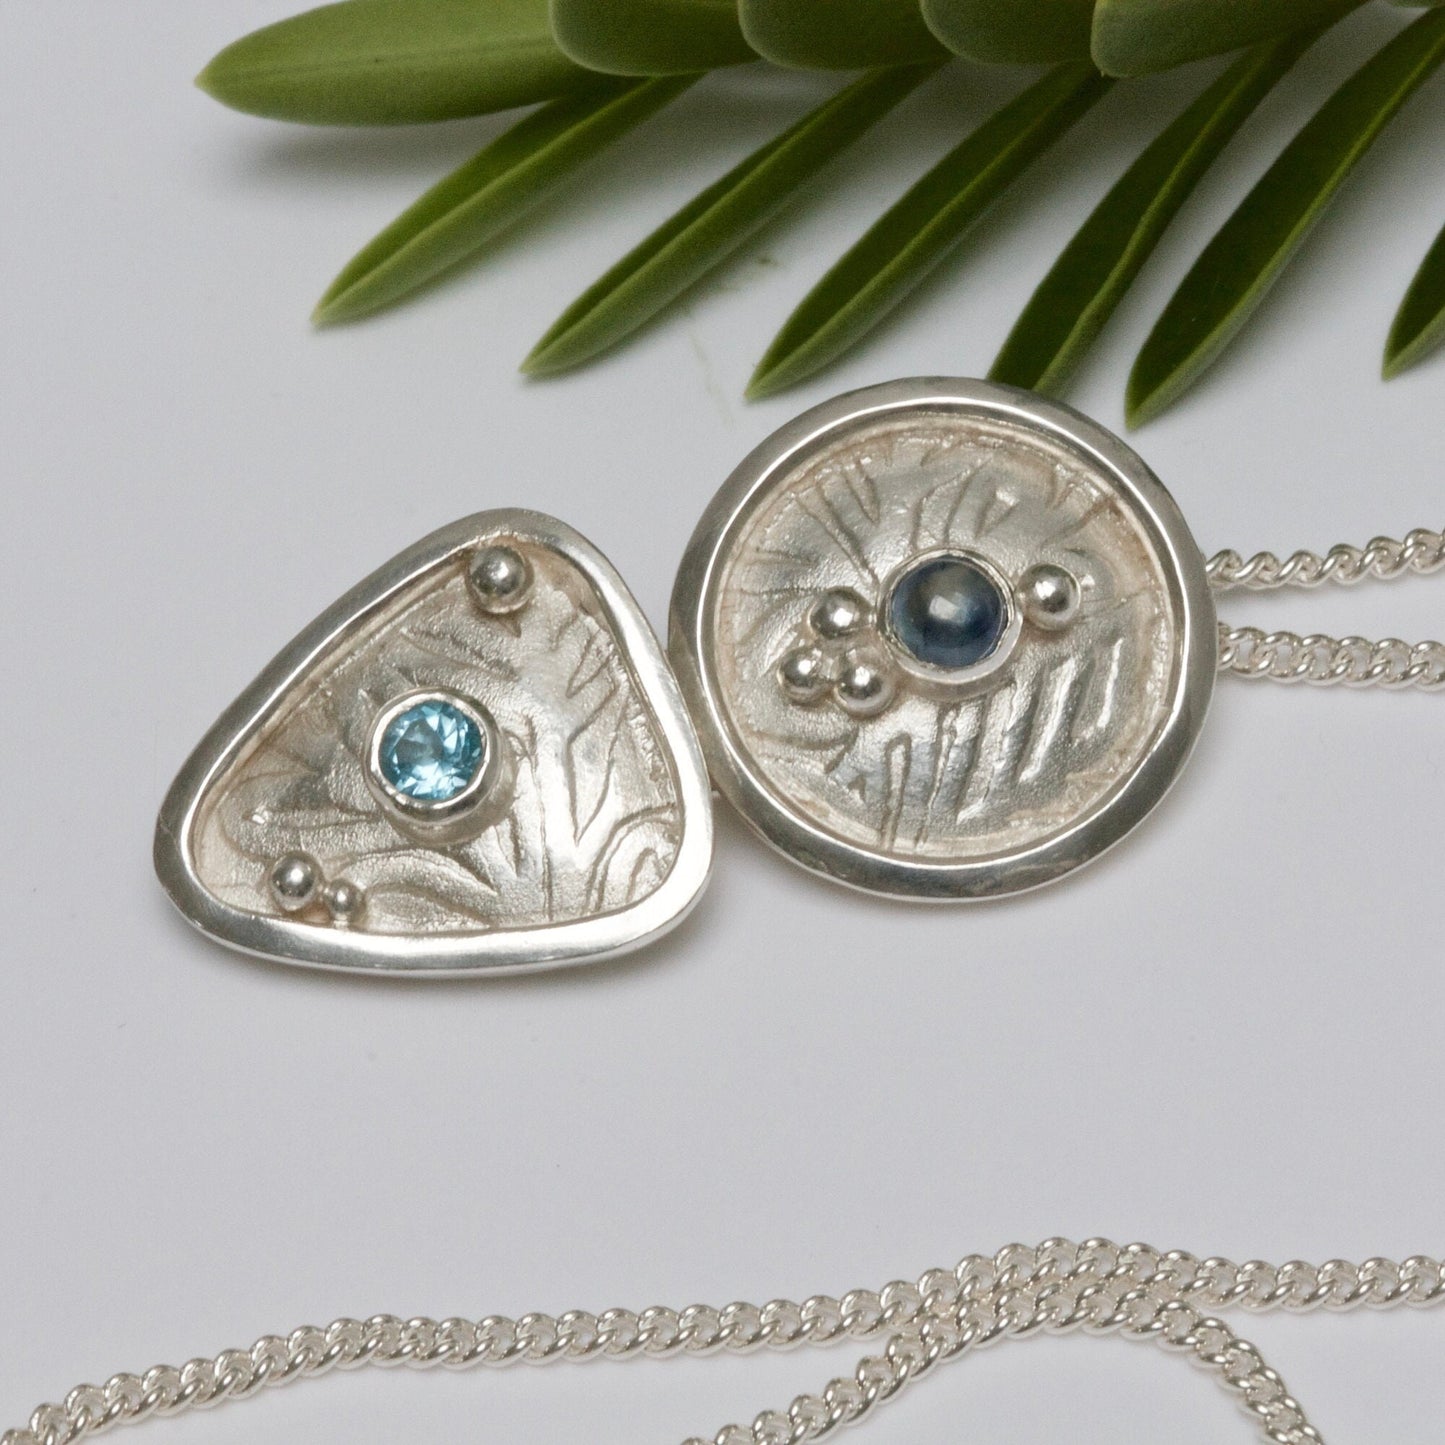 Silver Celtic Shield Necklace, Boudicca Warrior Necklace, Sapphire and Topaz Pendant